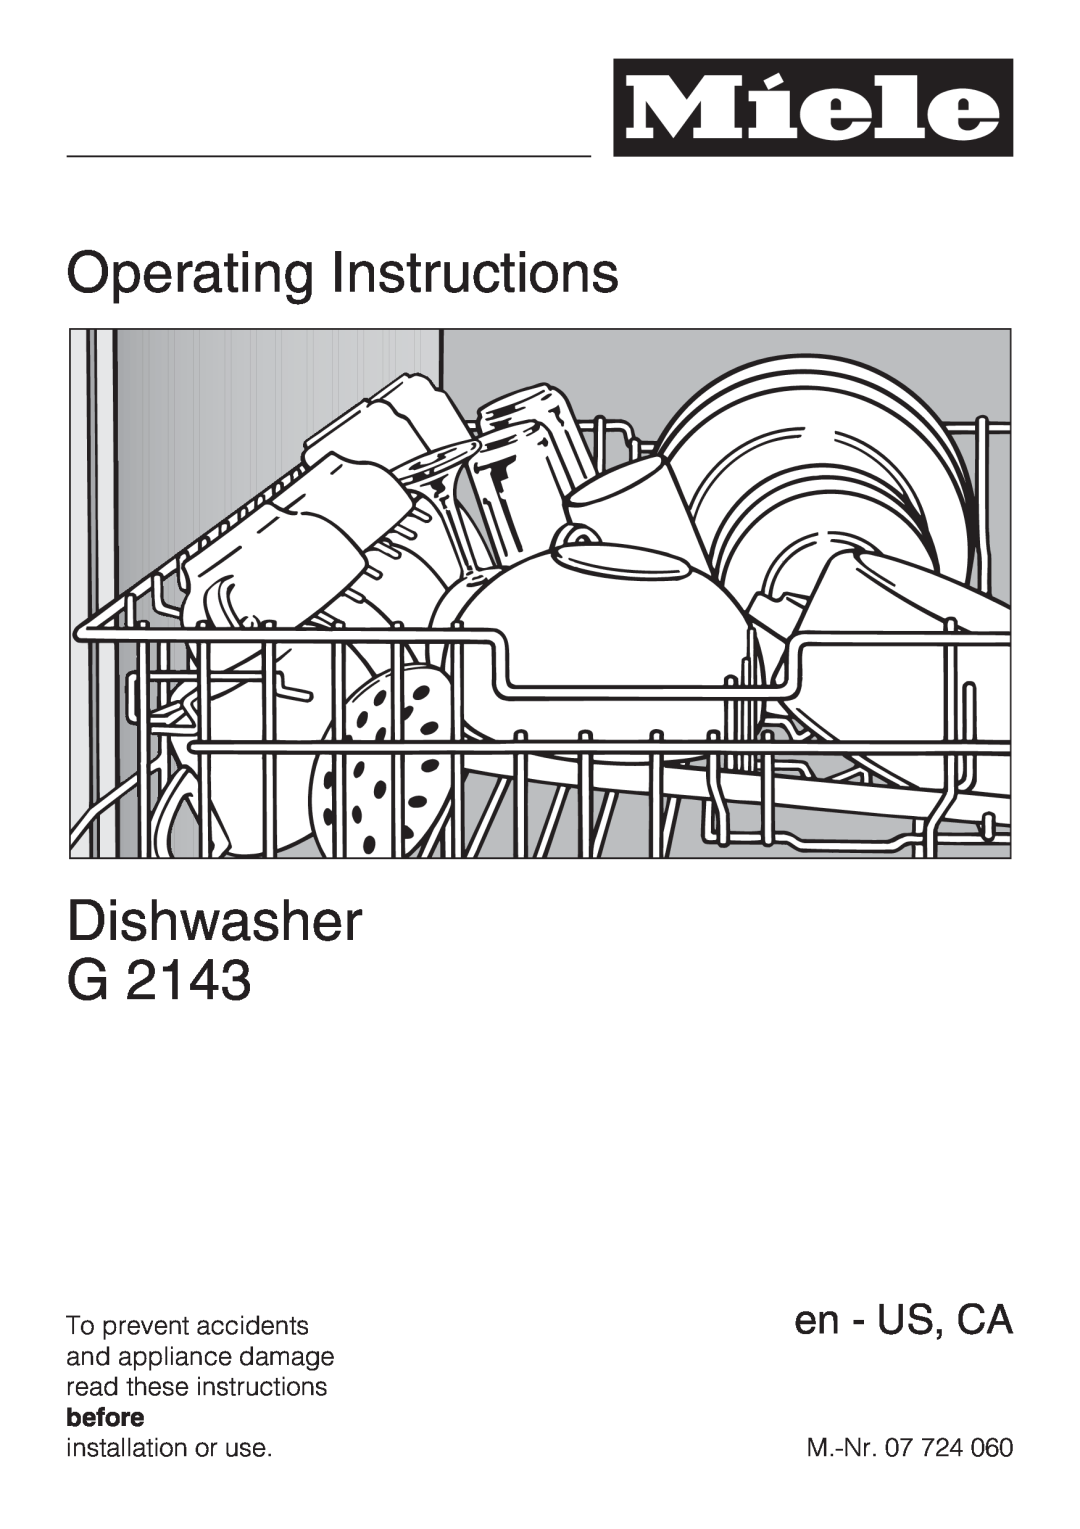 Miele G 2143 manual Operating Instructions, Dishwasher, en - US, CA 